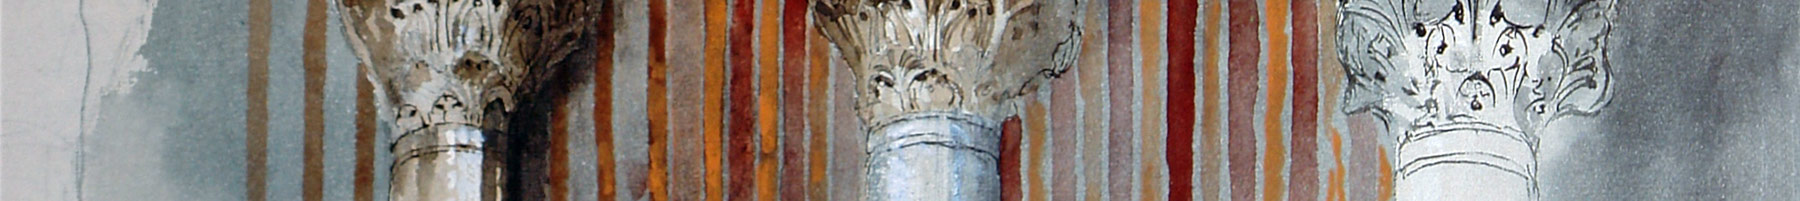 illustration of marble inlaying on pillars